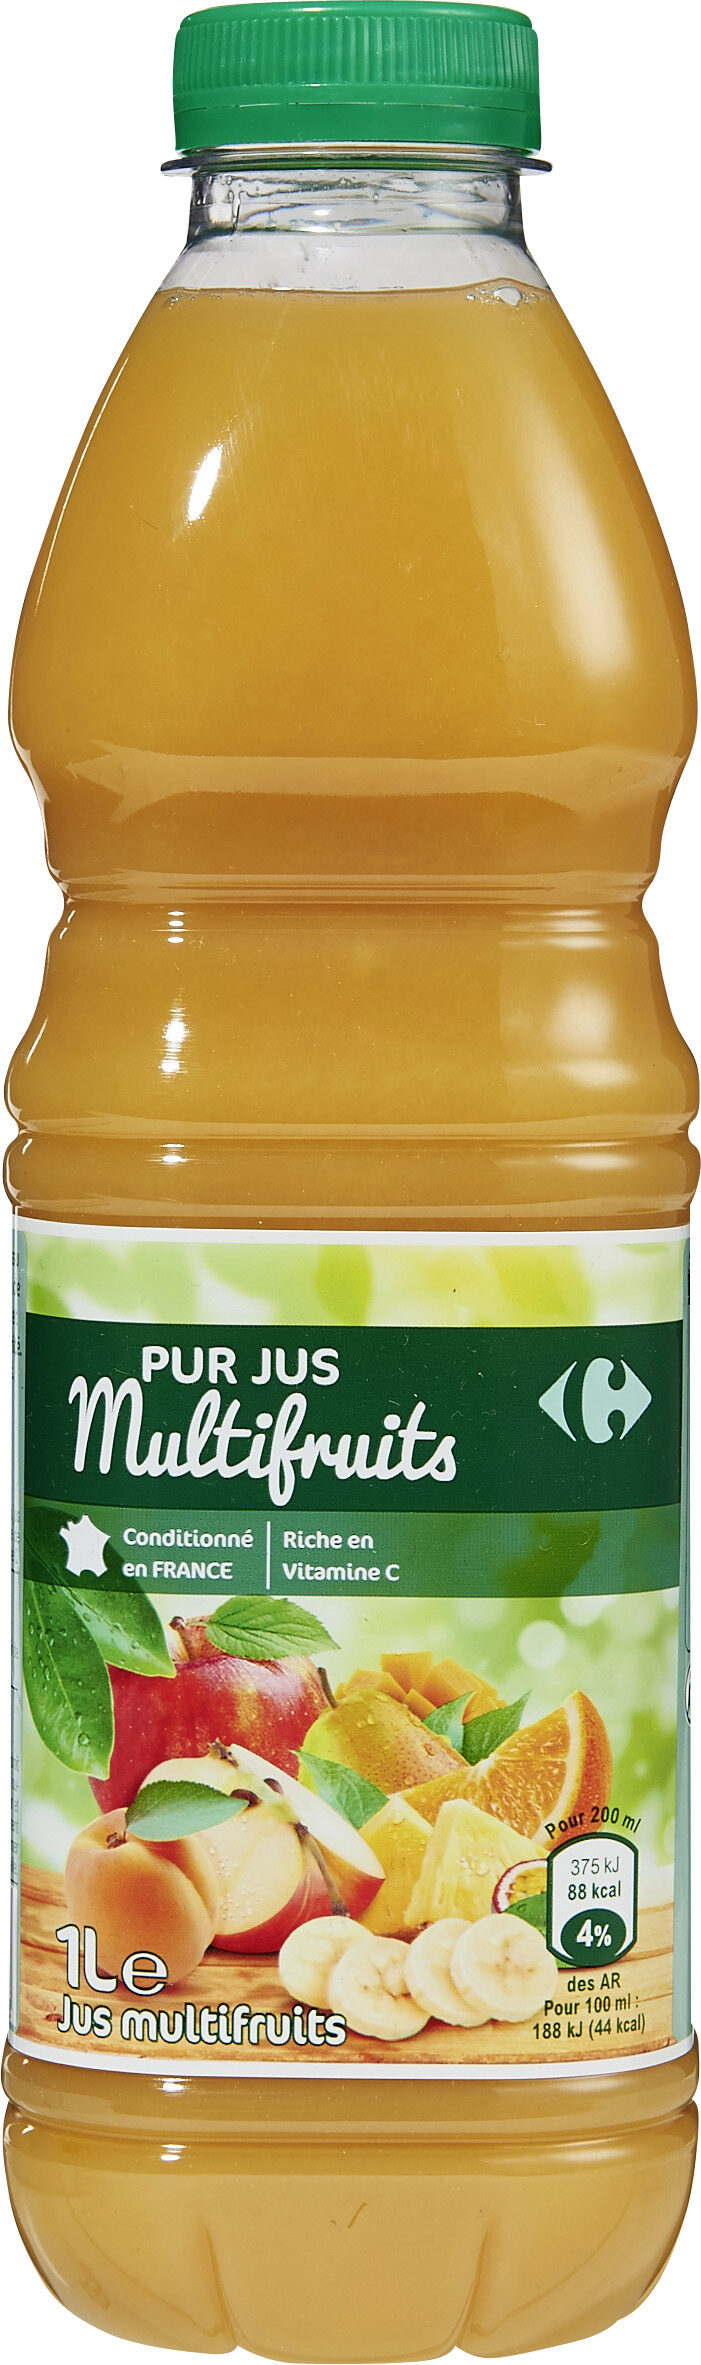 100% pur jus jus multifruits - Produkt - fr